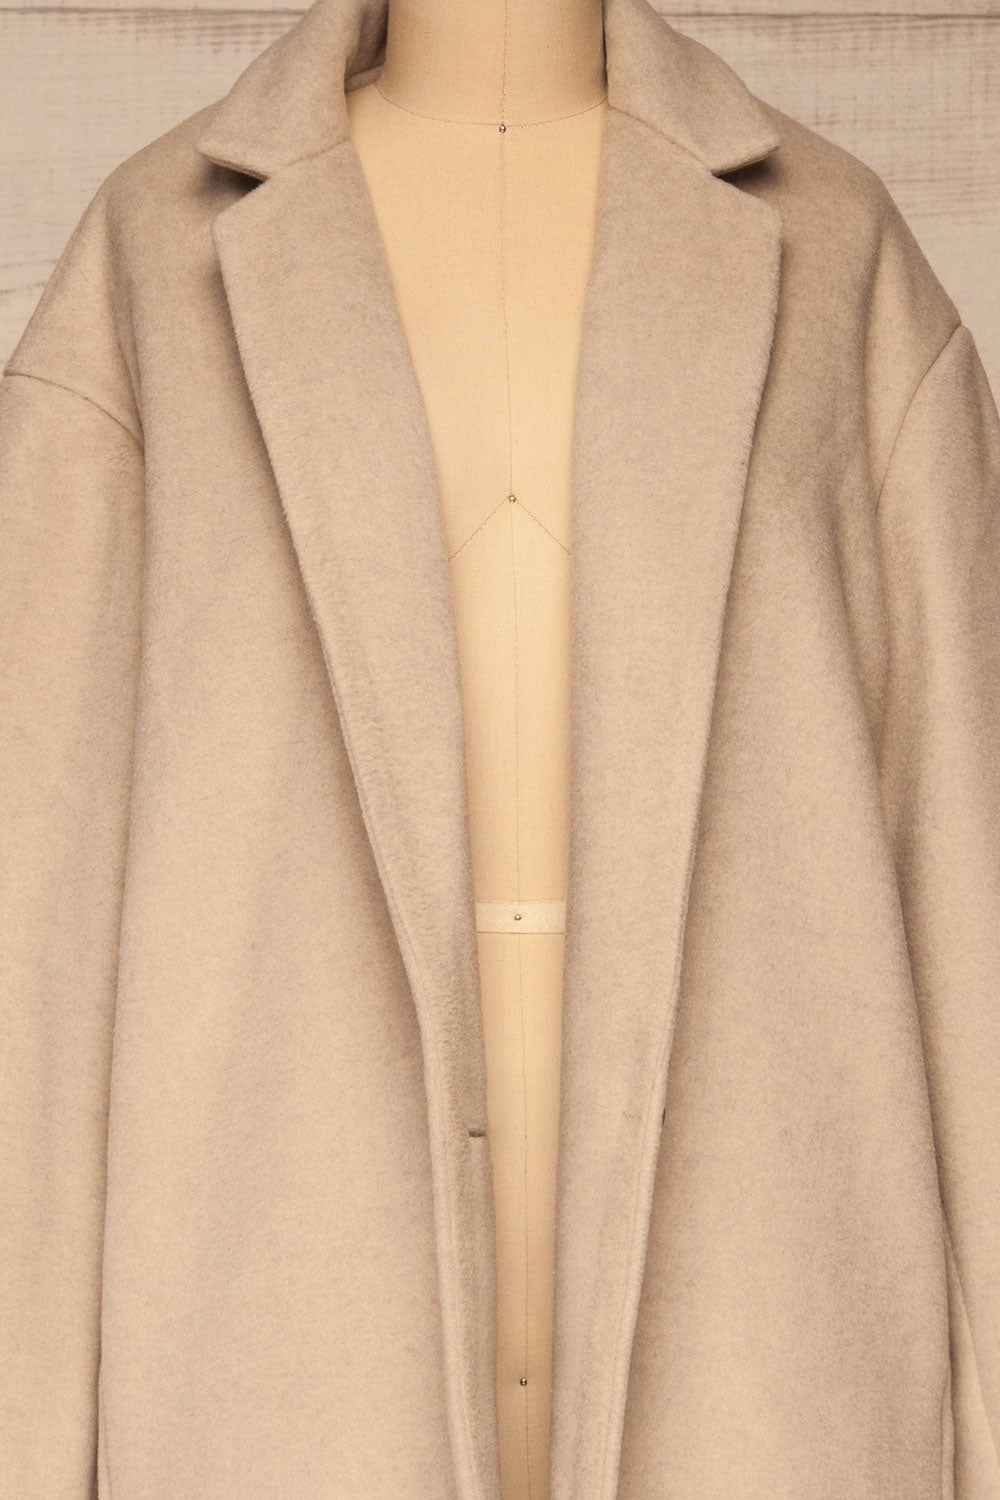 Pinczow Long Beige Wool Coat | La petite garçonne open close-up